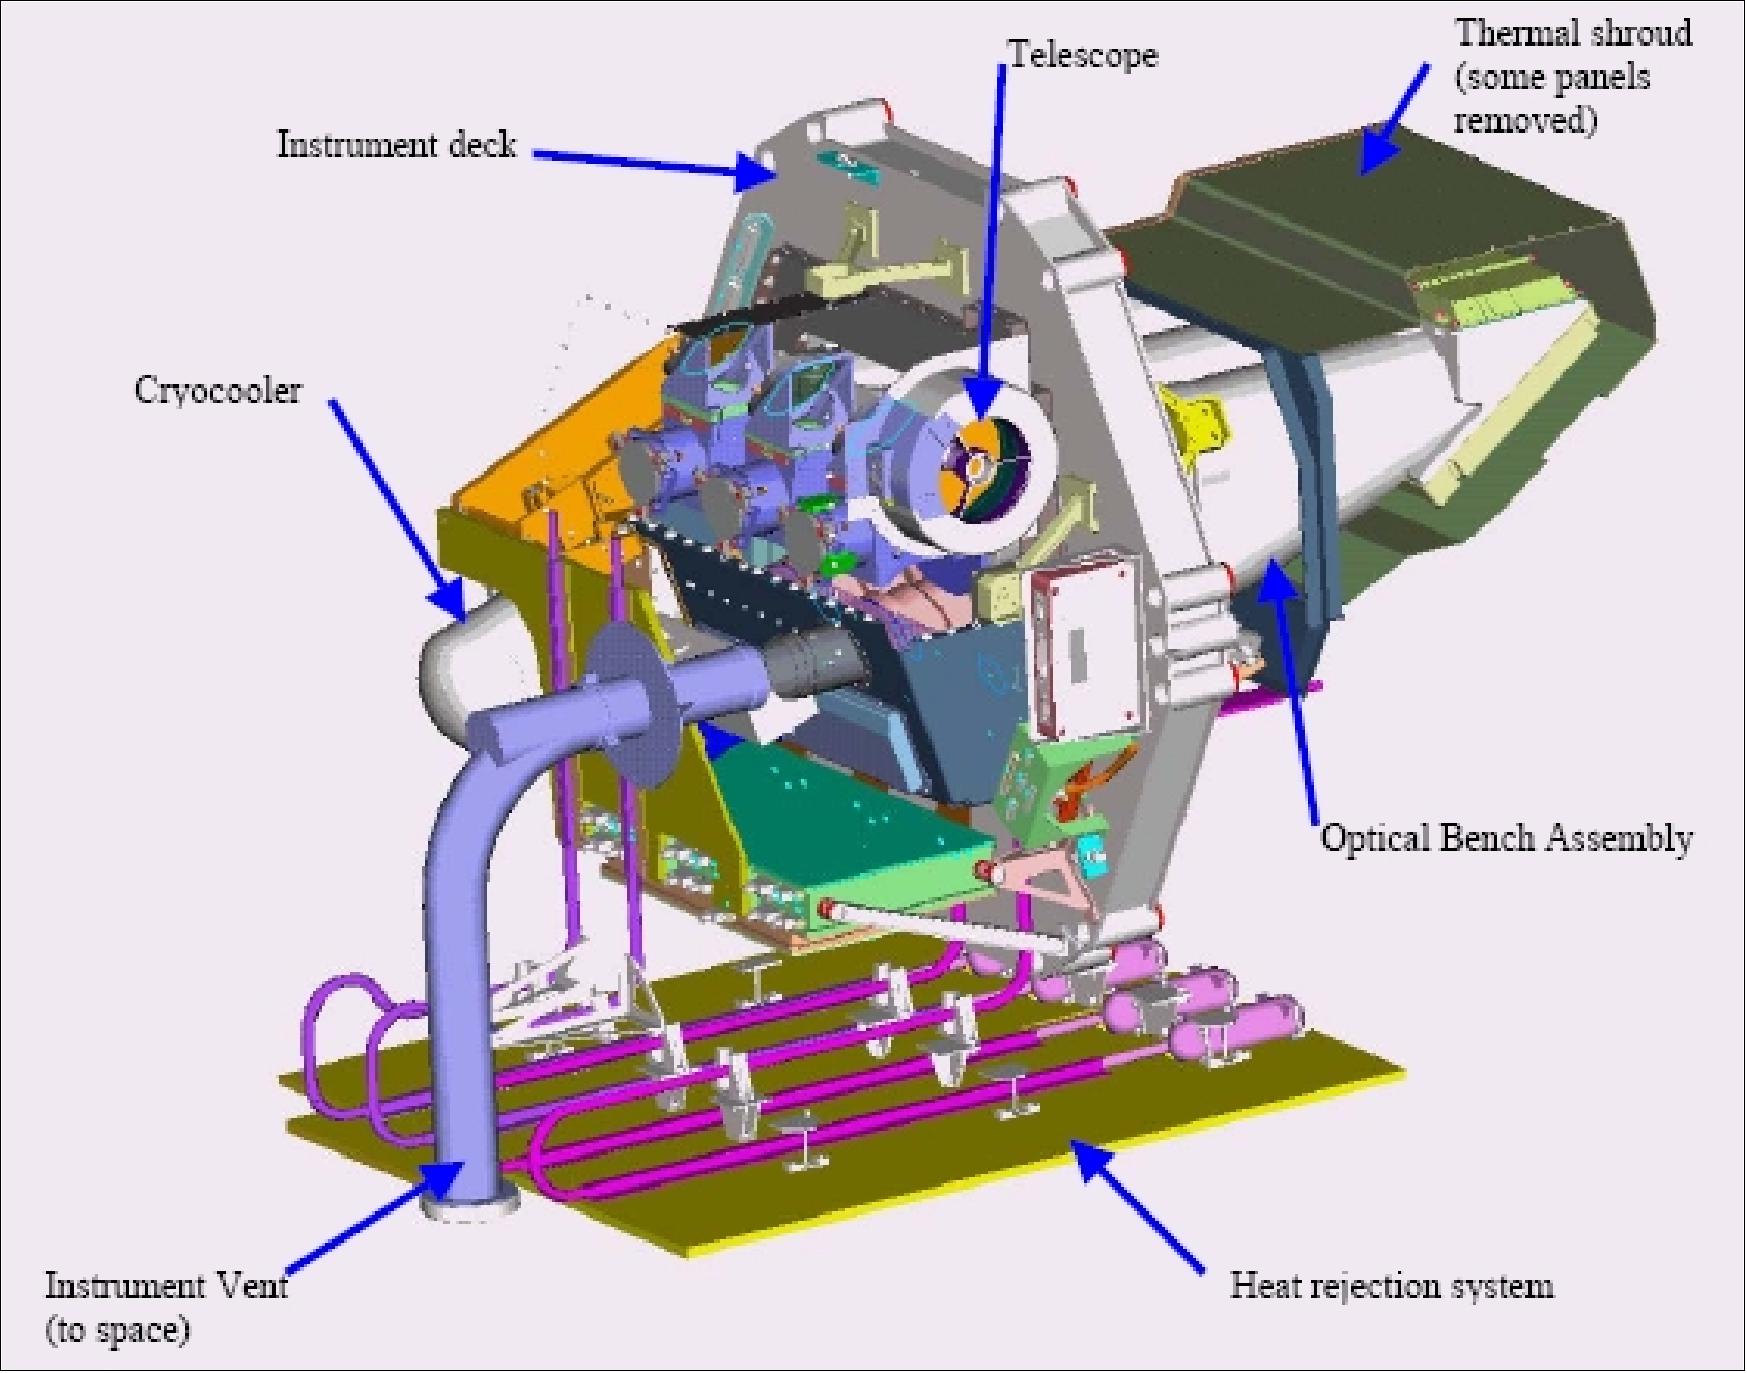 Figure 29: Illustration of the OCO-2 instrument (image credit: HSSS/JPL)